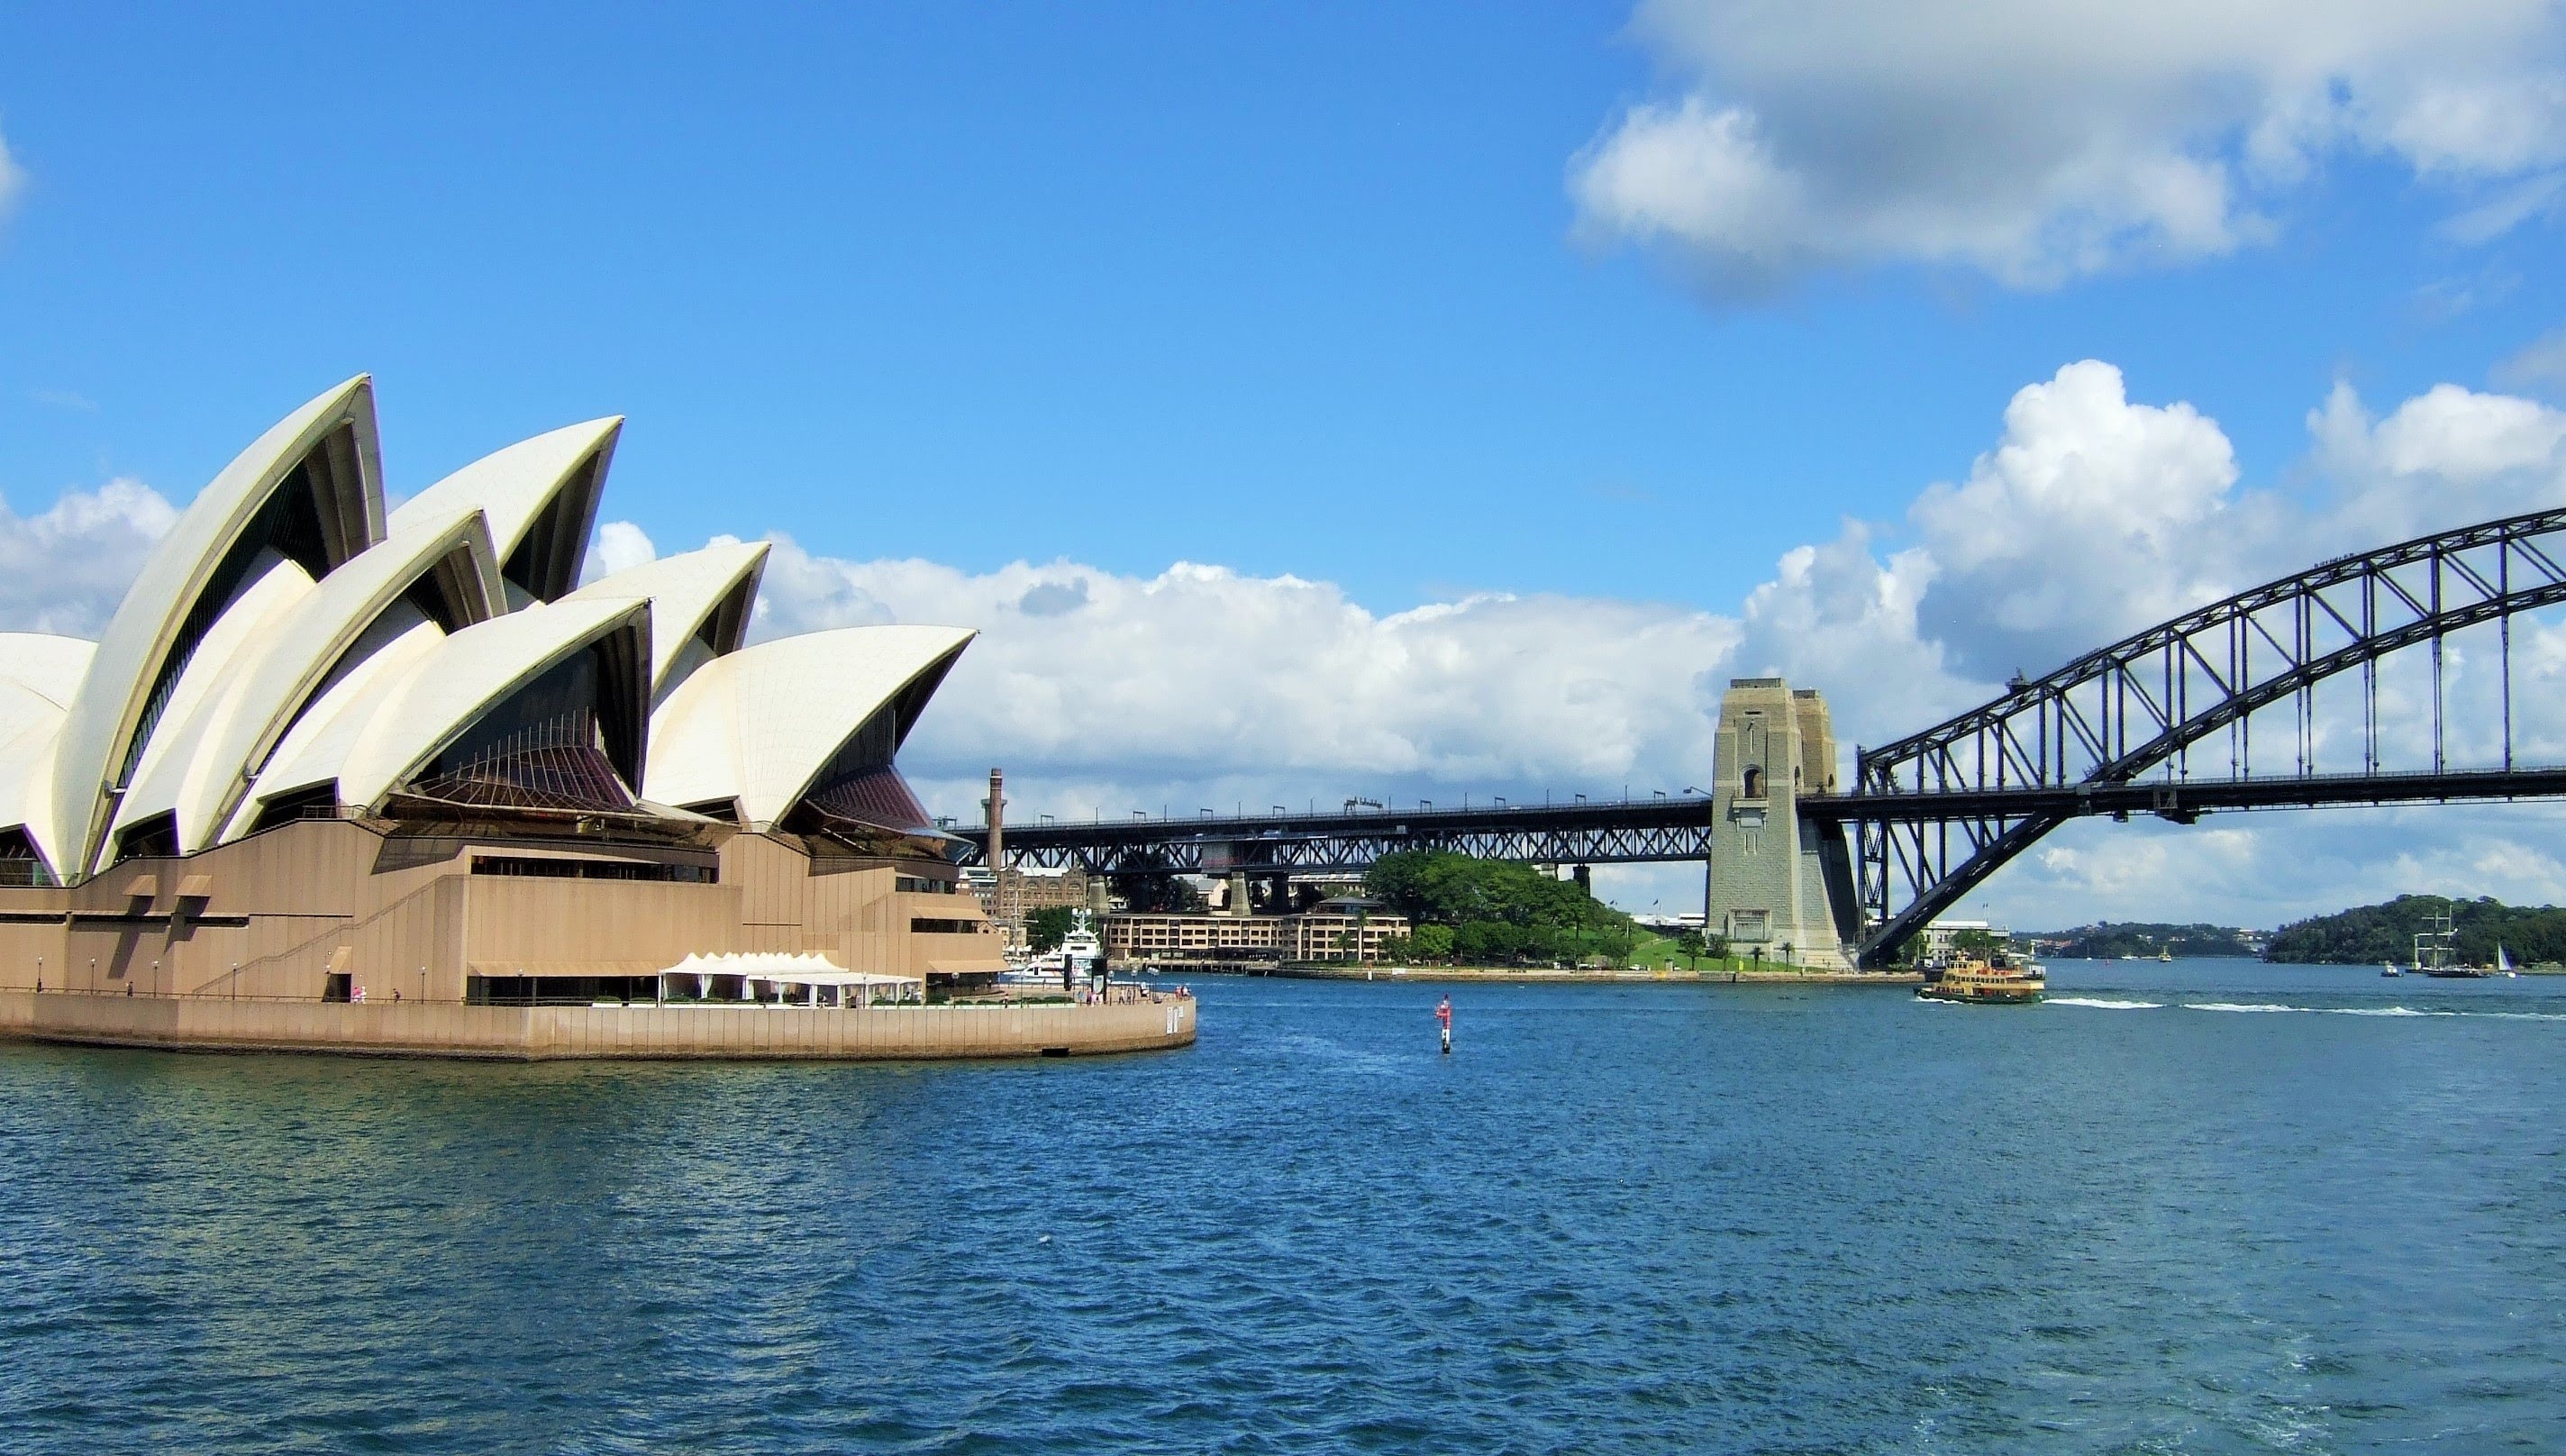 Sydney Opera House, Desktop wallpapers, HD images, Free download, 2850x1620 HD Desktop